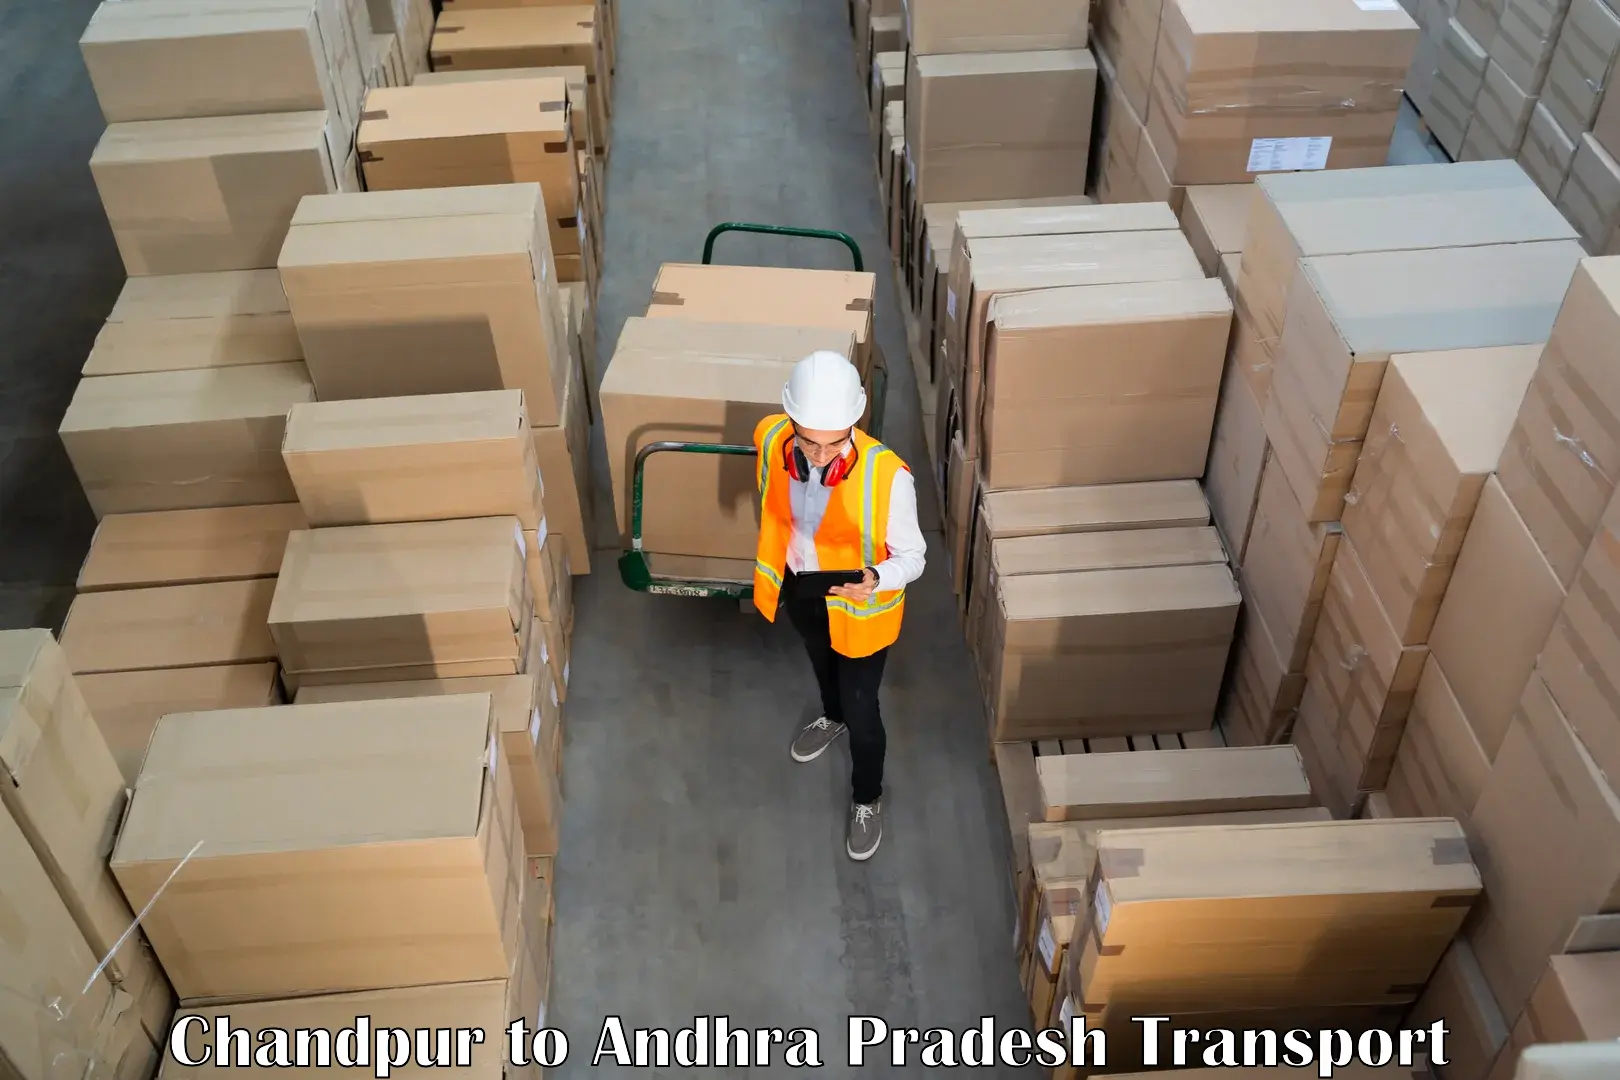 Part load transport service in India Chandpur to Puttur Tirupati